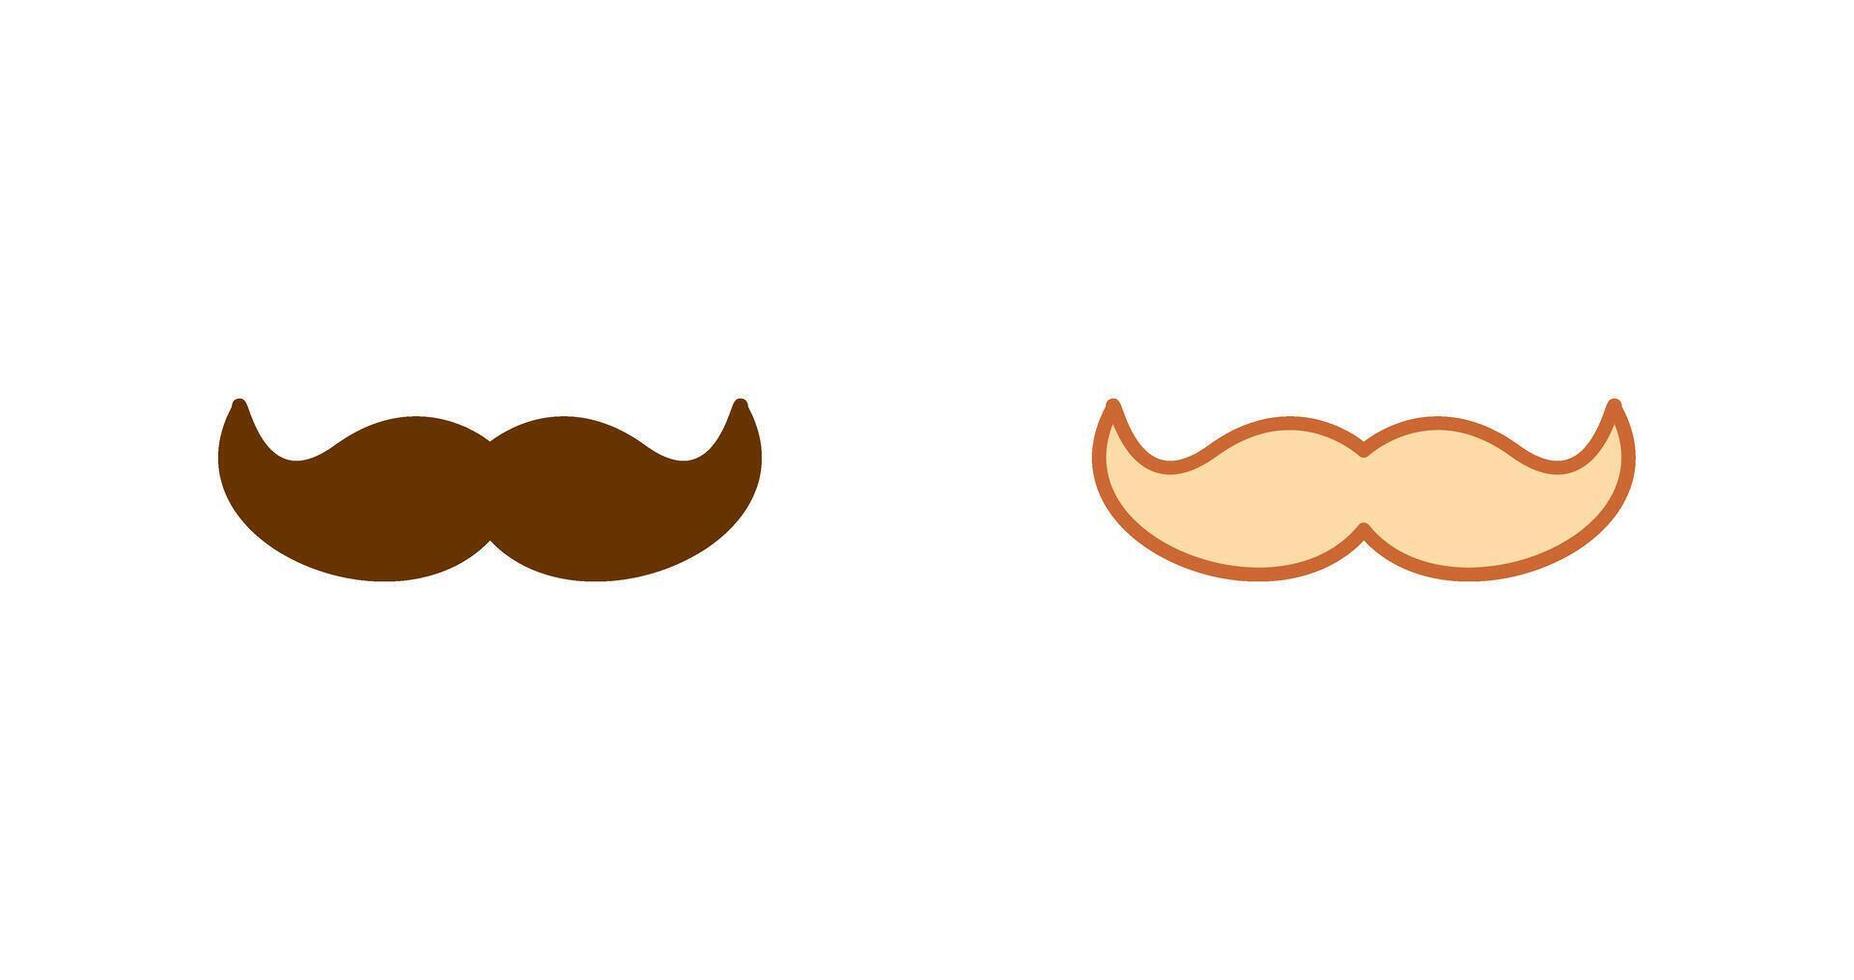 Moustache II Icon vector